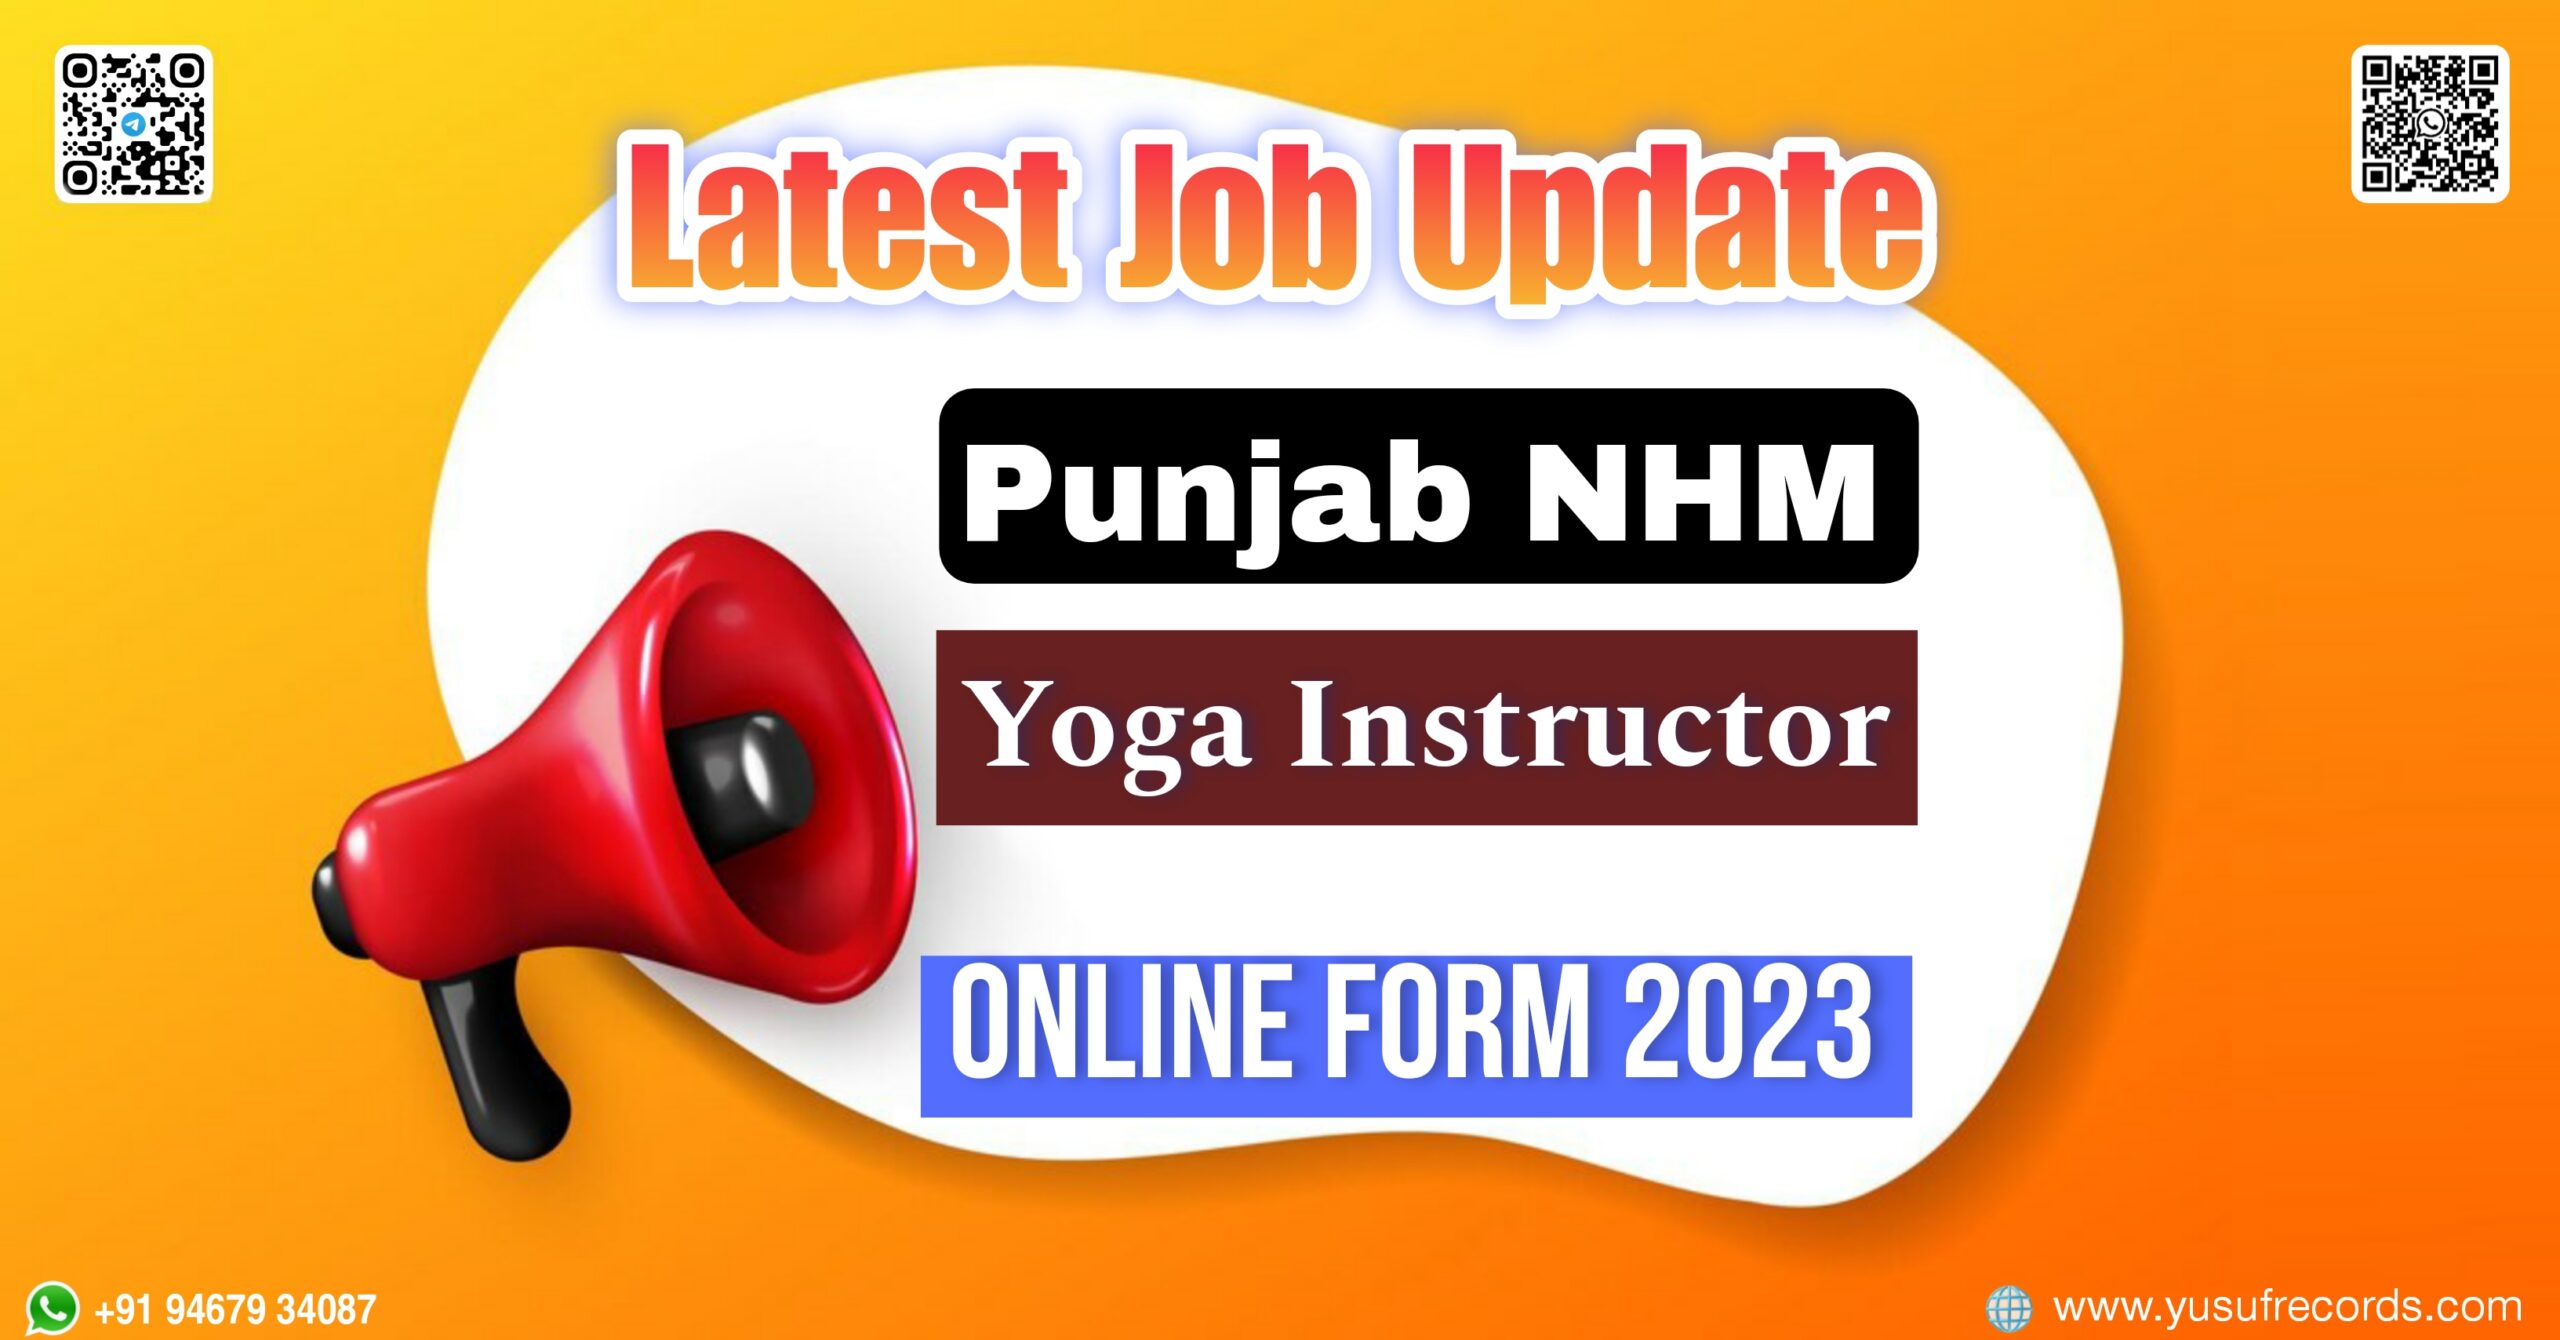 Punjab NHM Yoga Instructor Online Form yusufrecords